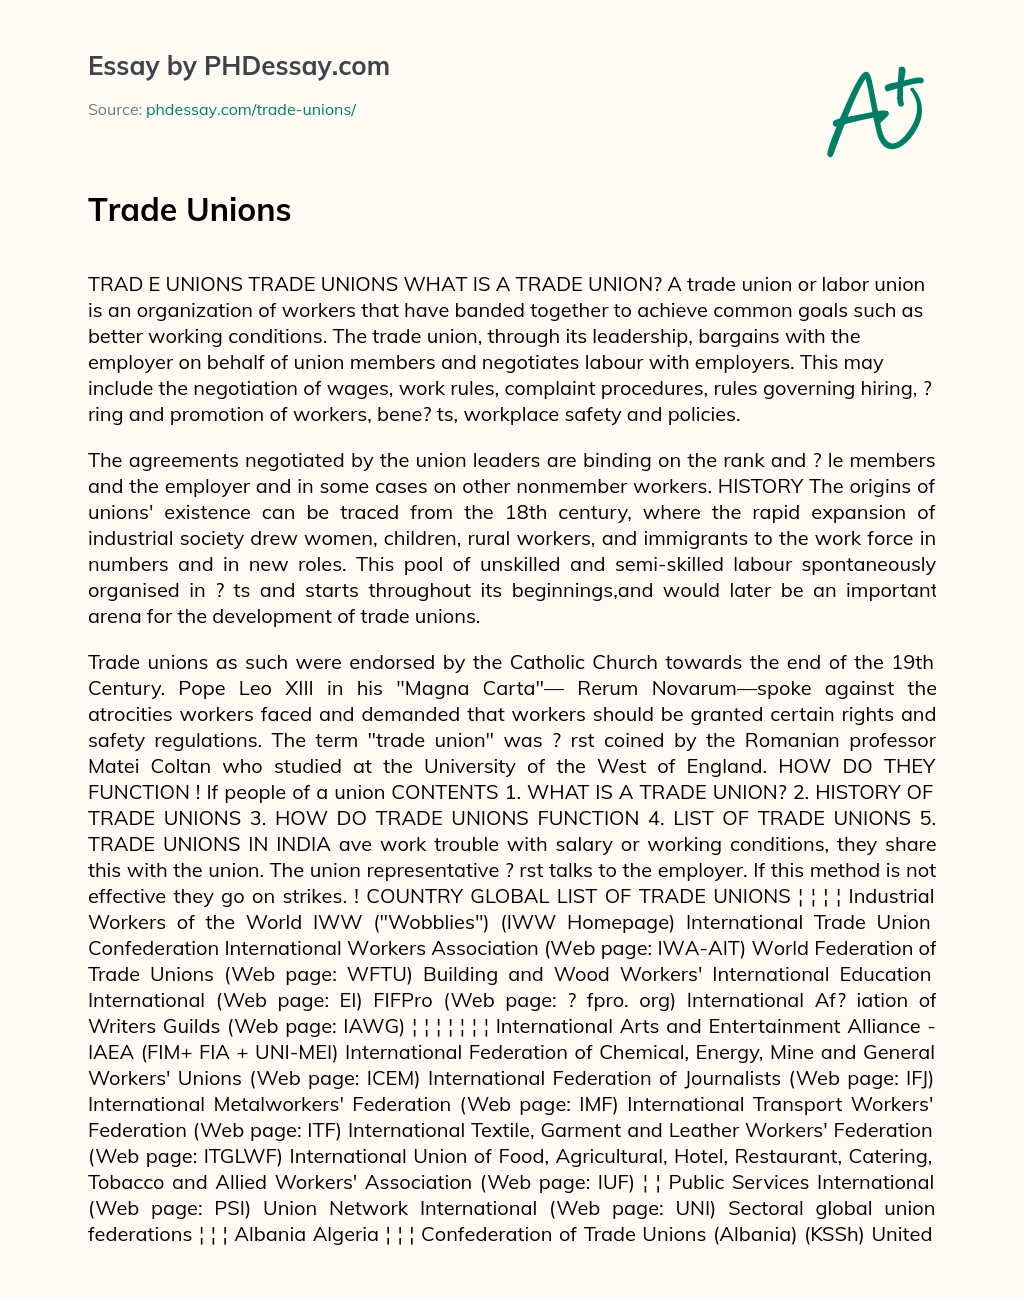 Trade Unions essay